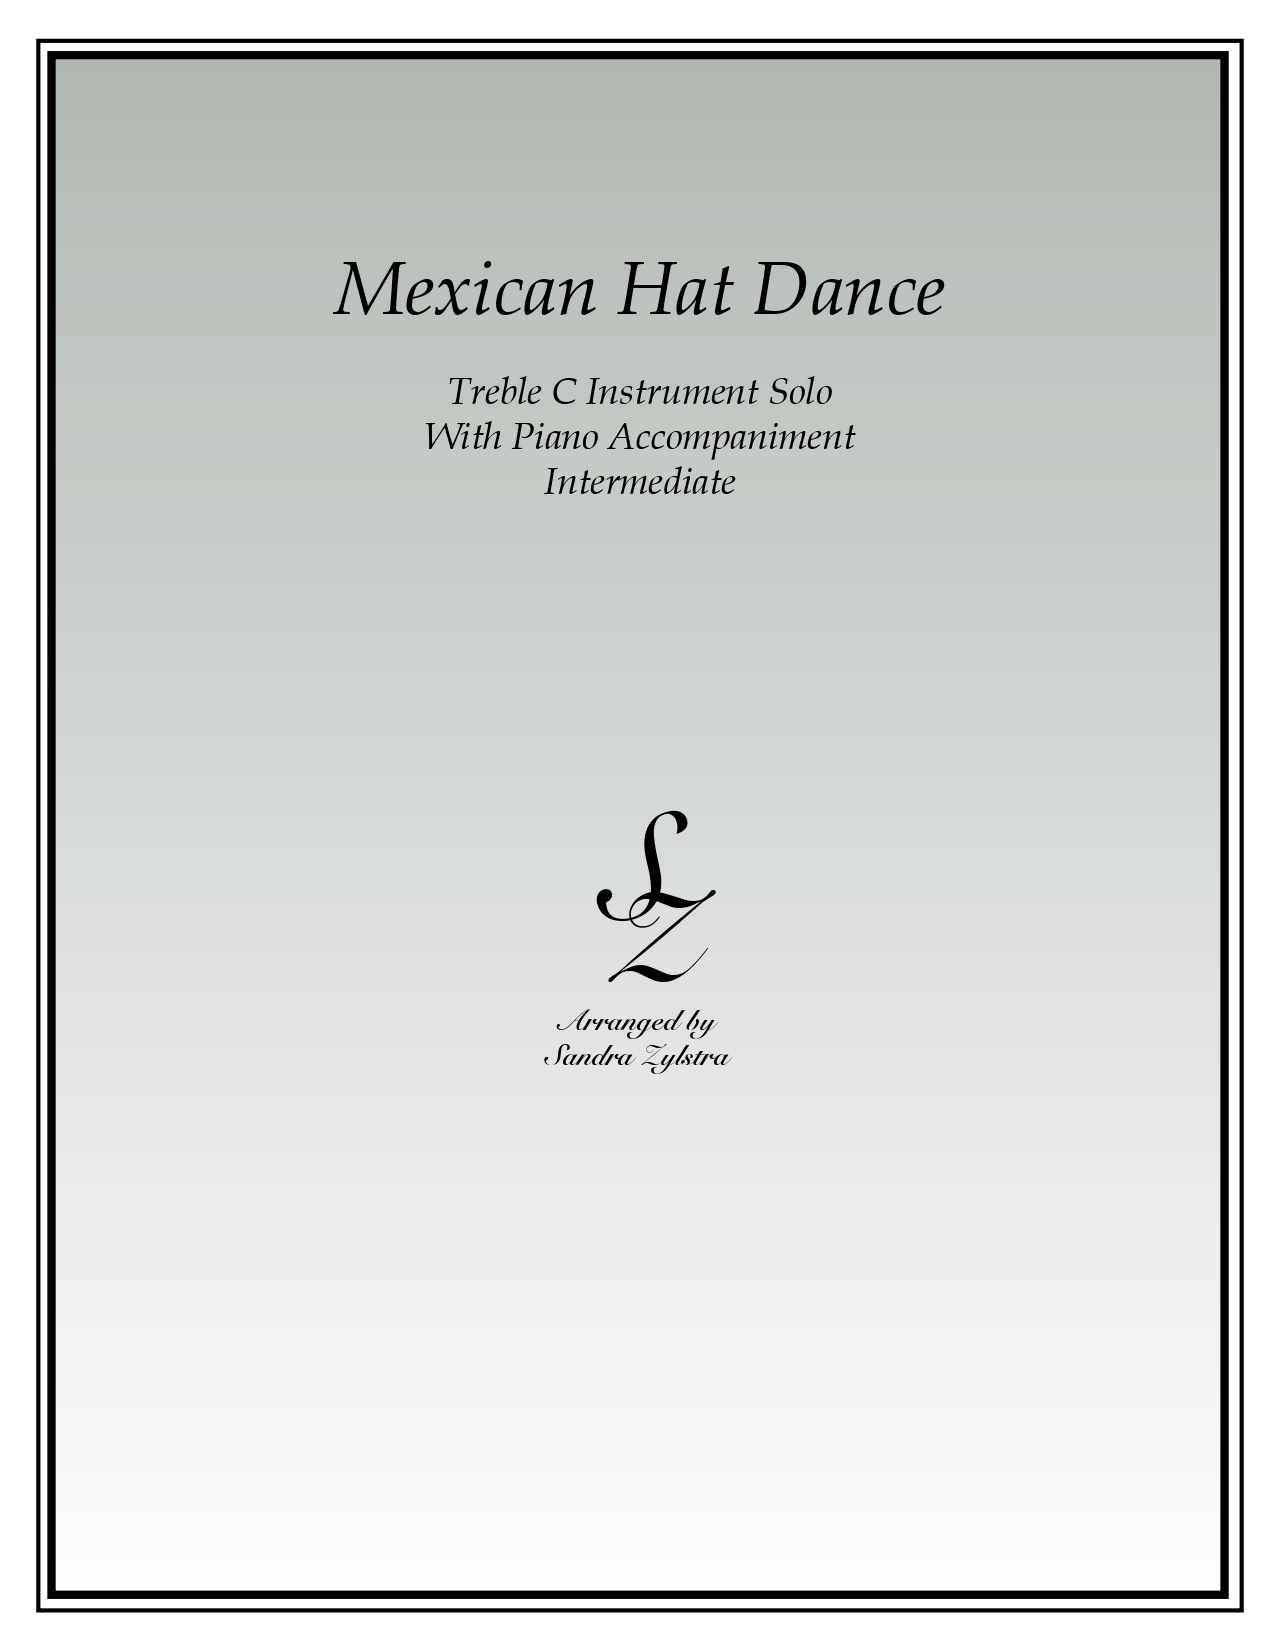 Mexican Hat Dance treble C instrument solo part cover page 00011